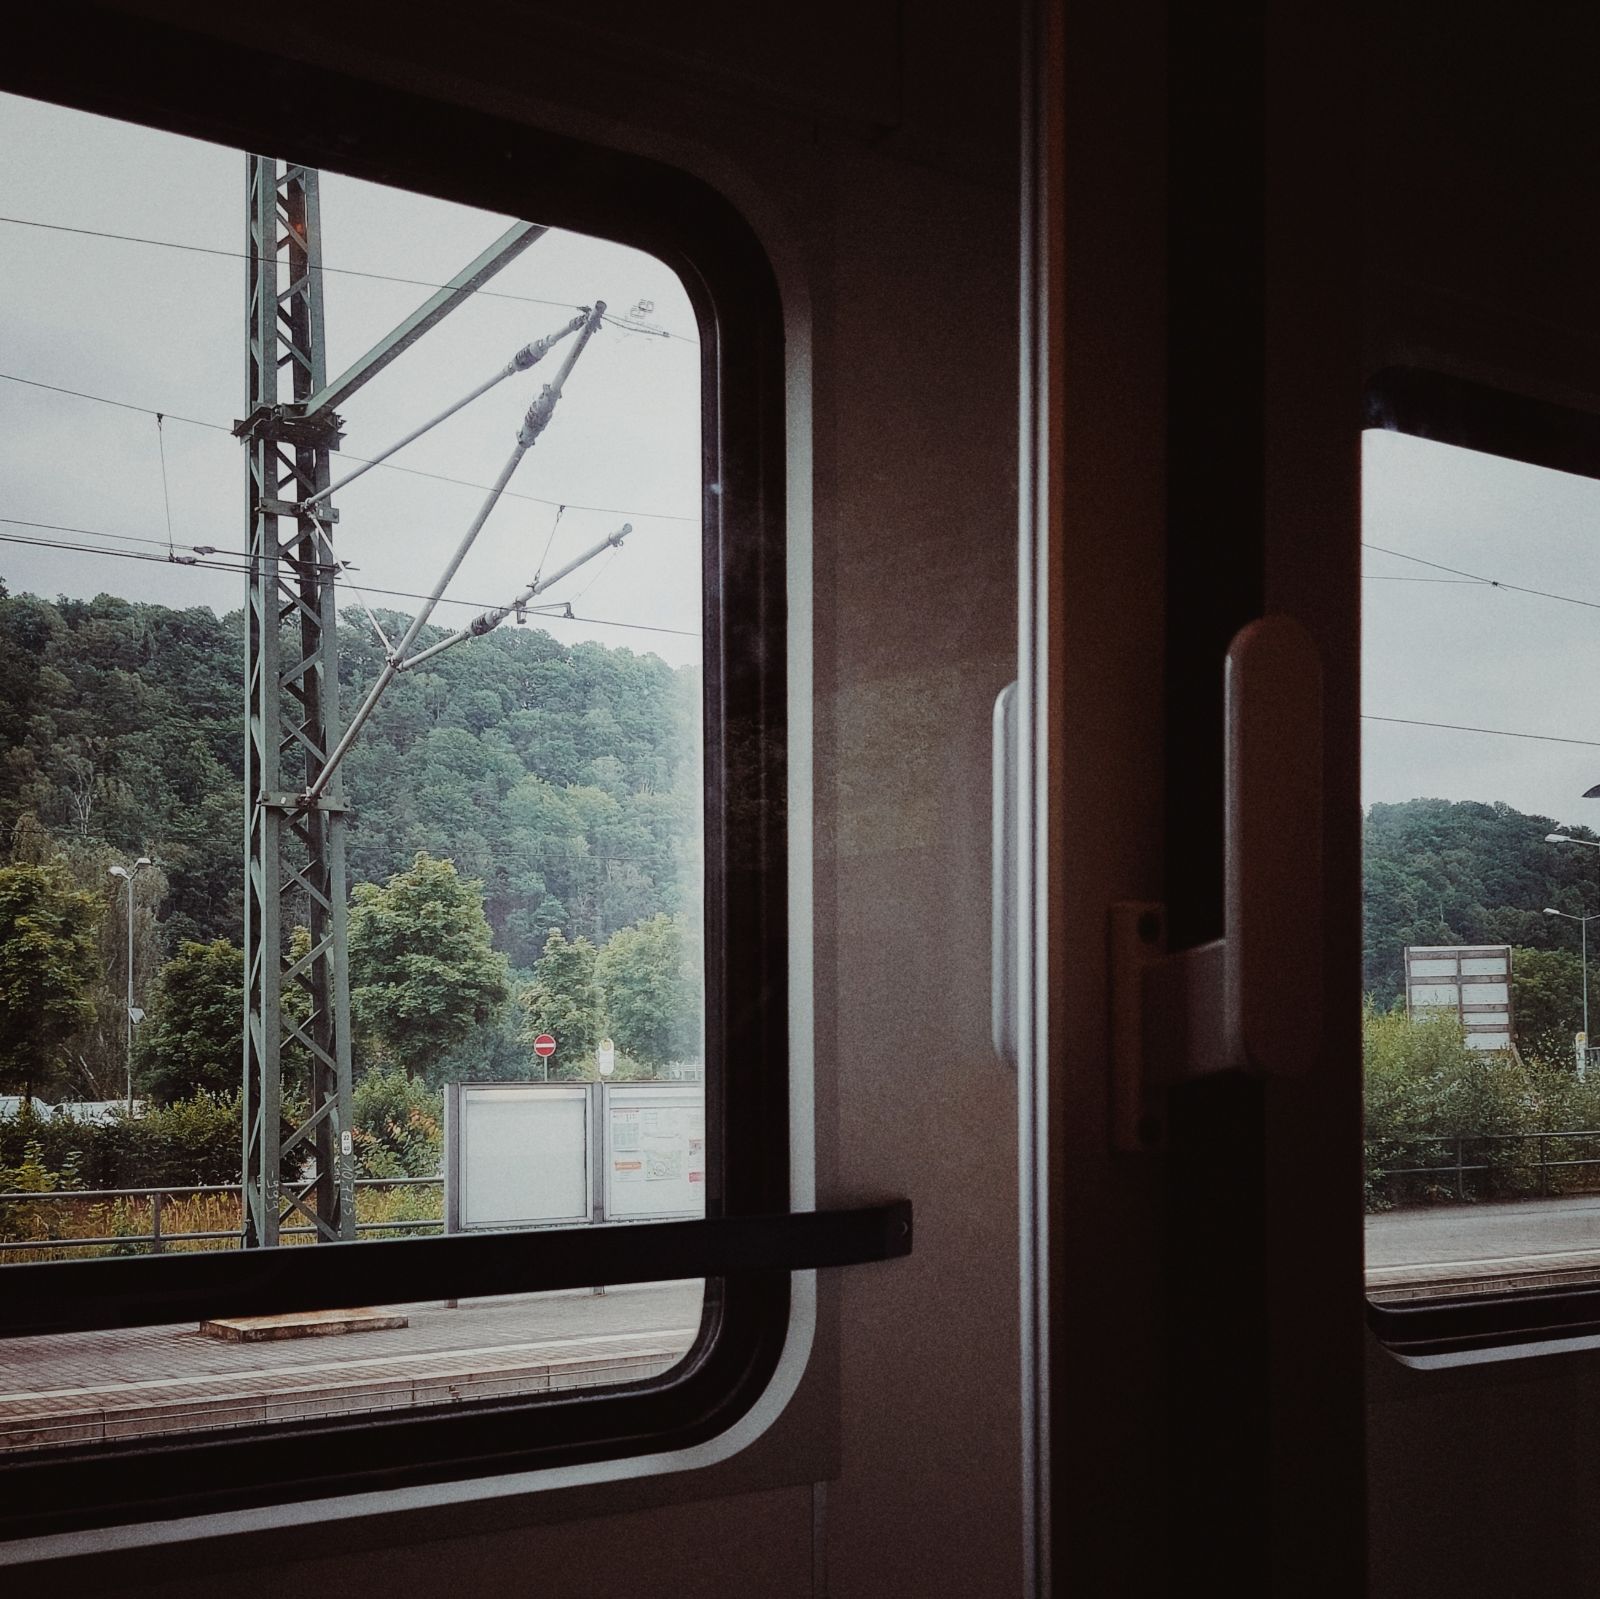 Infrastructure behind a train window.